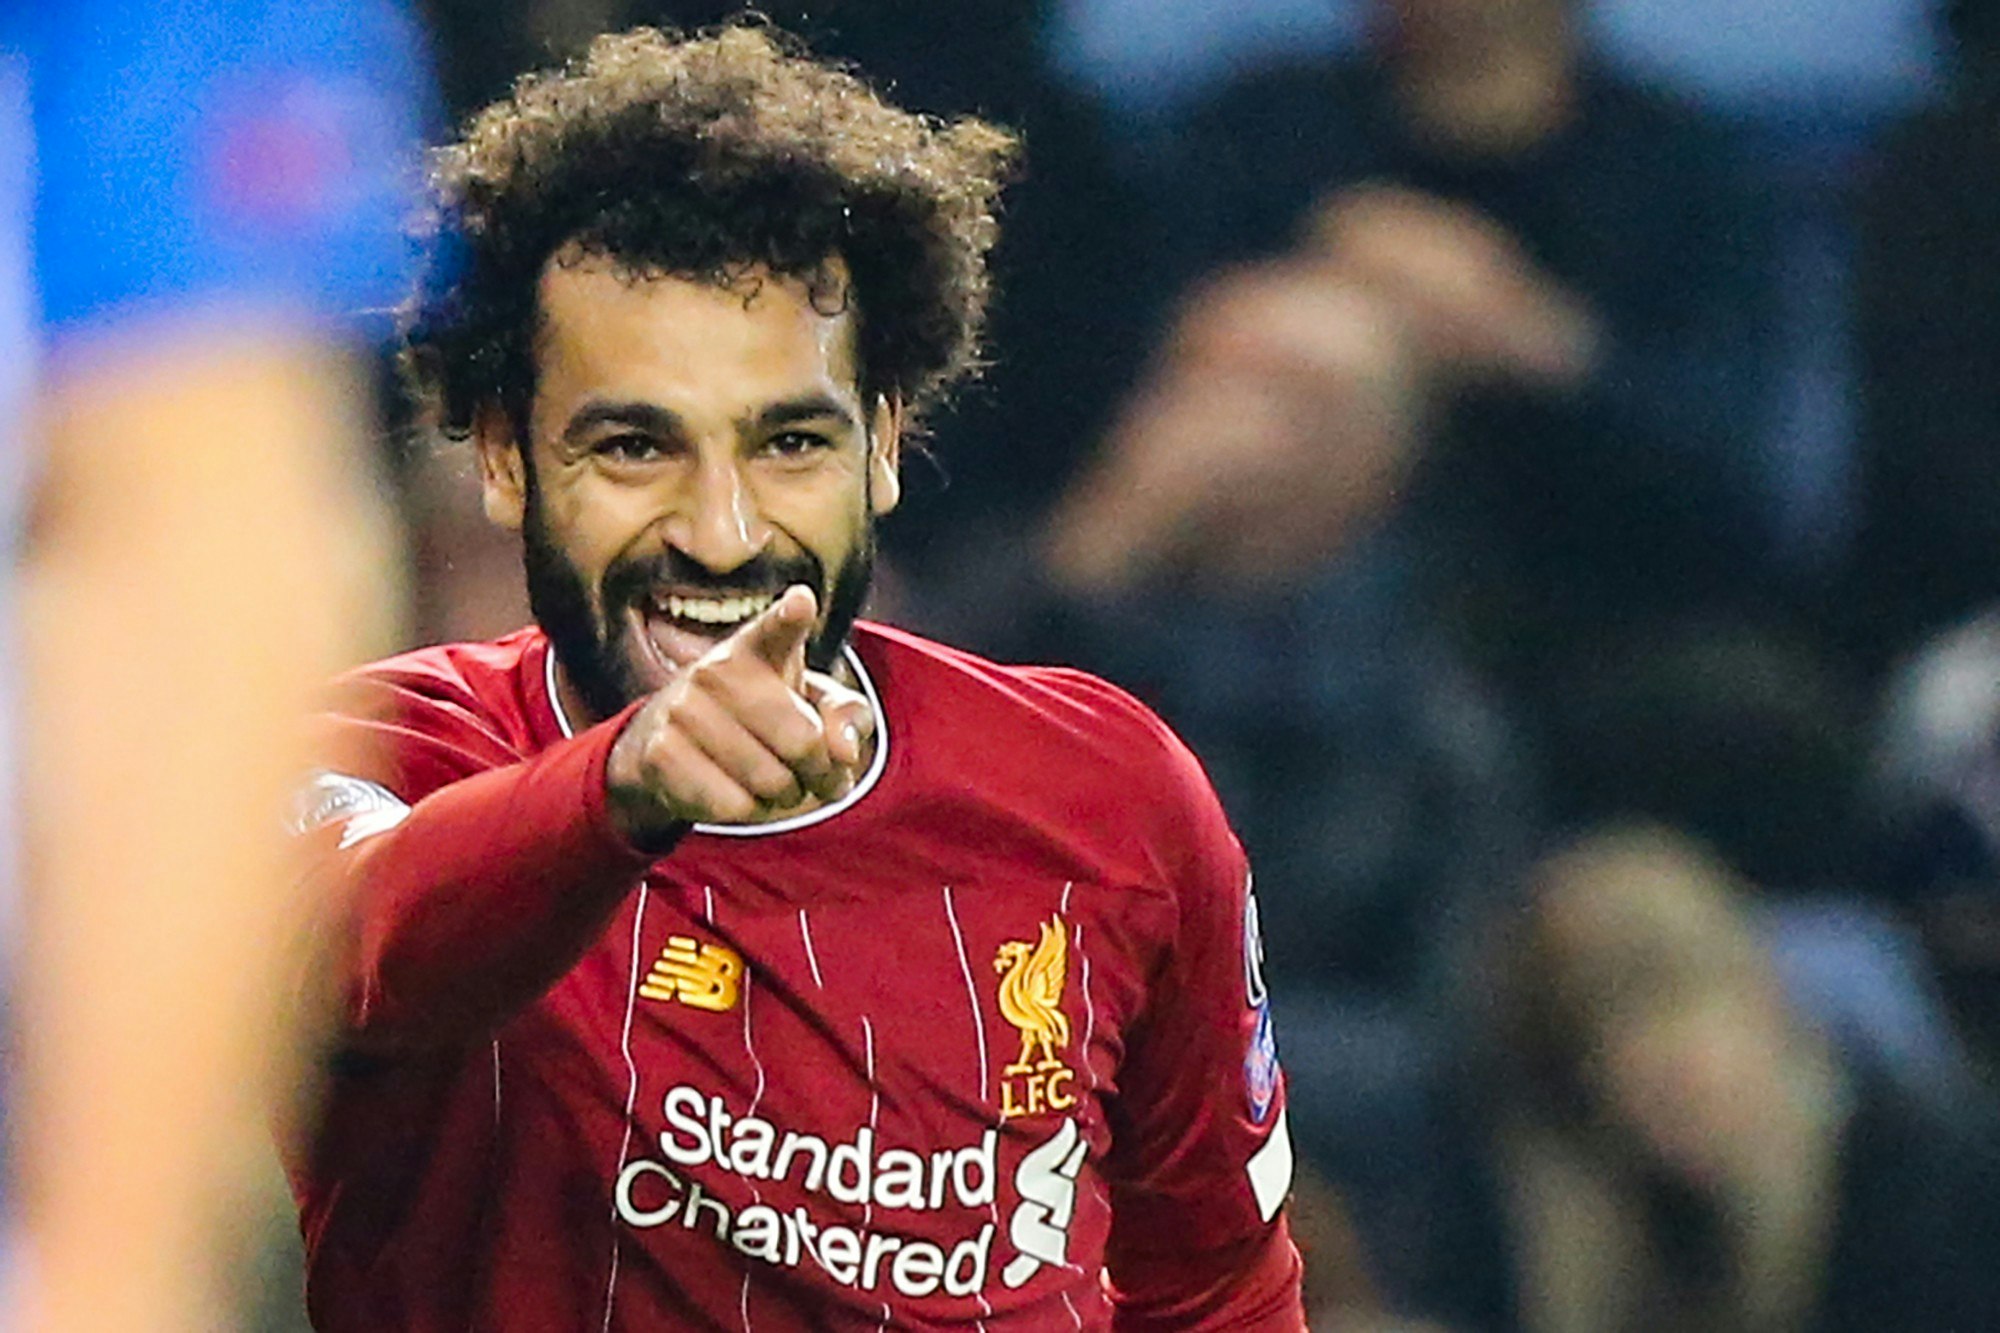 Liverpool's Egyptian midfielder Mohamed Salah celebrates after scoring a goal 